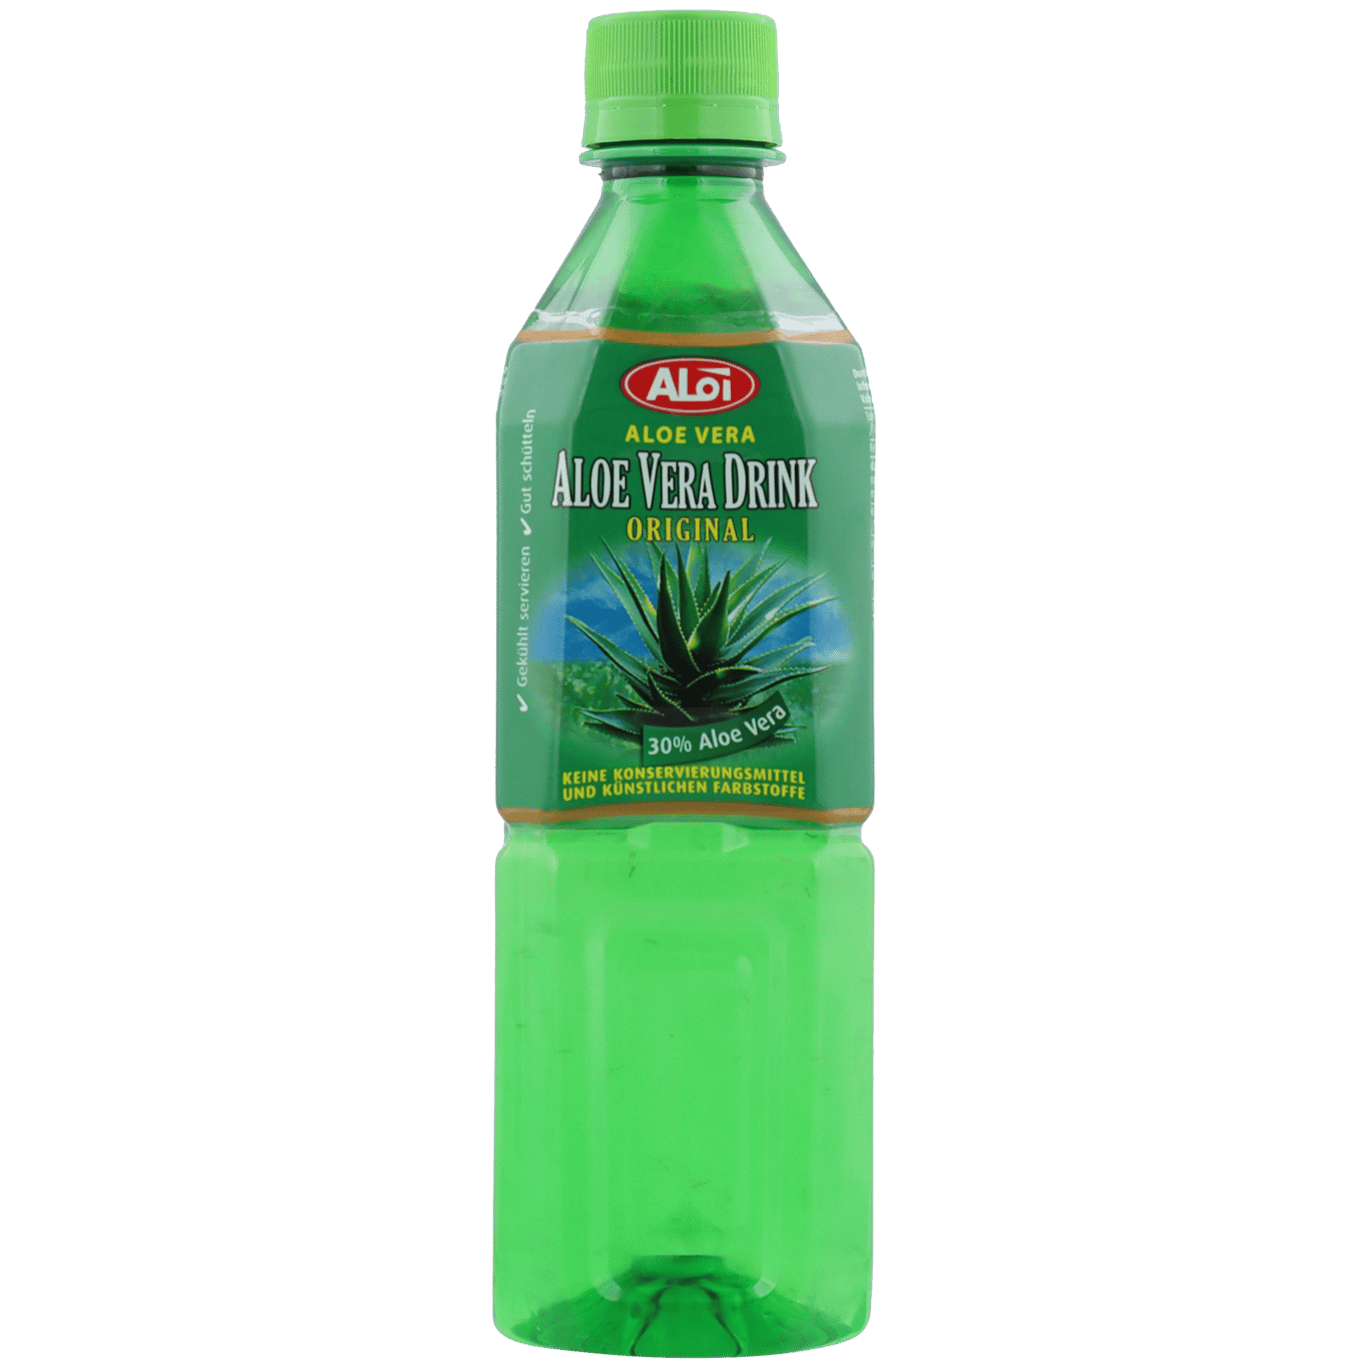 Aloi Aloe Vera Drink